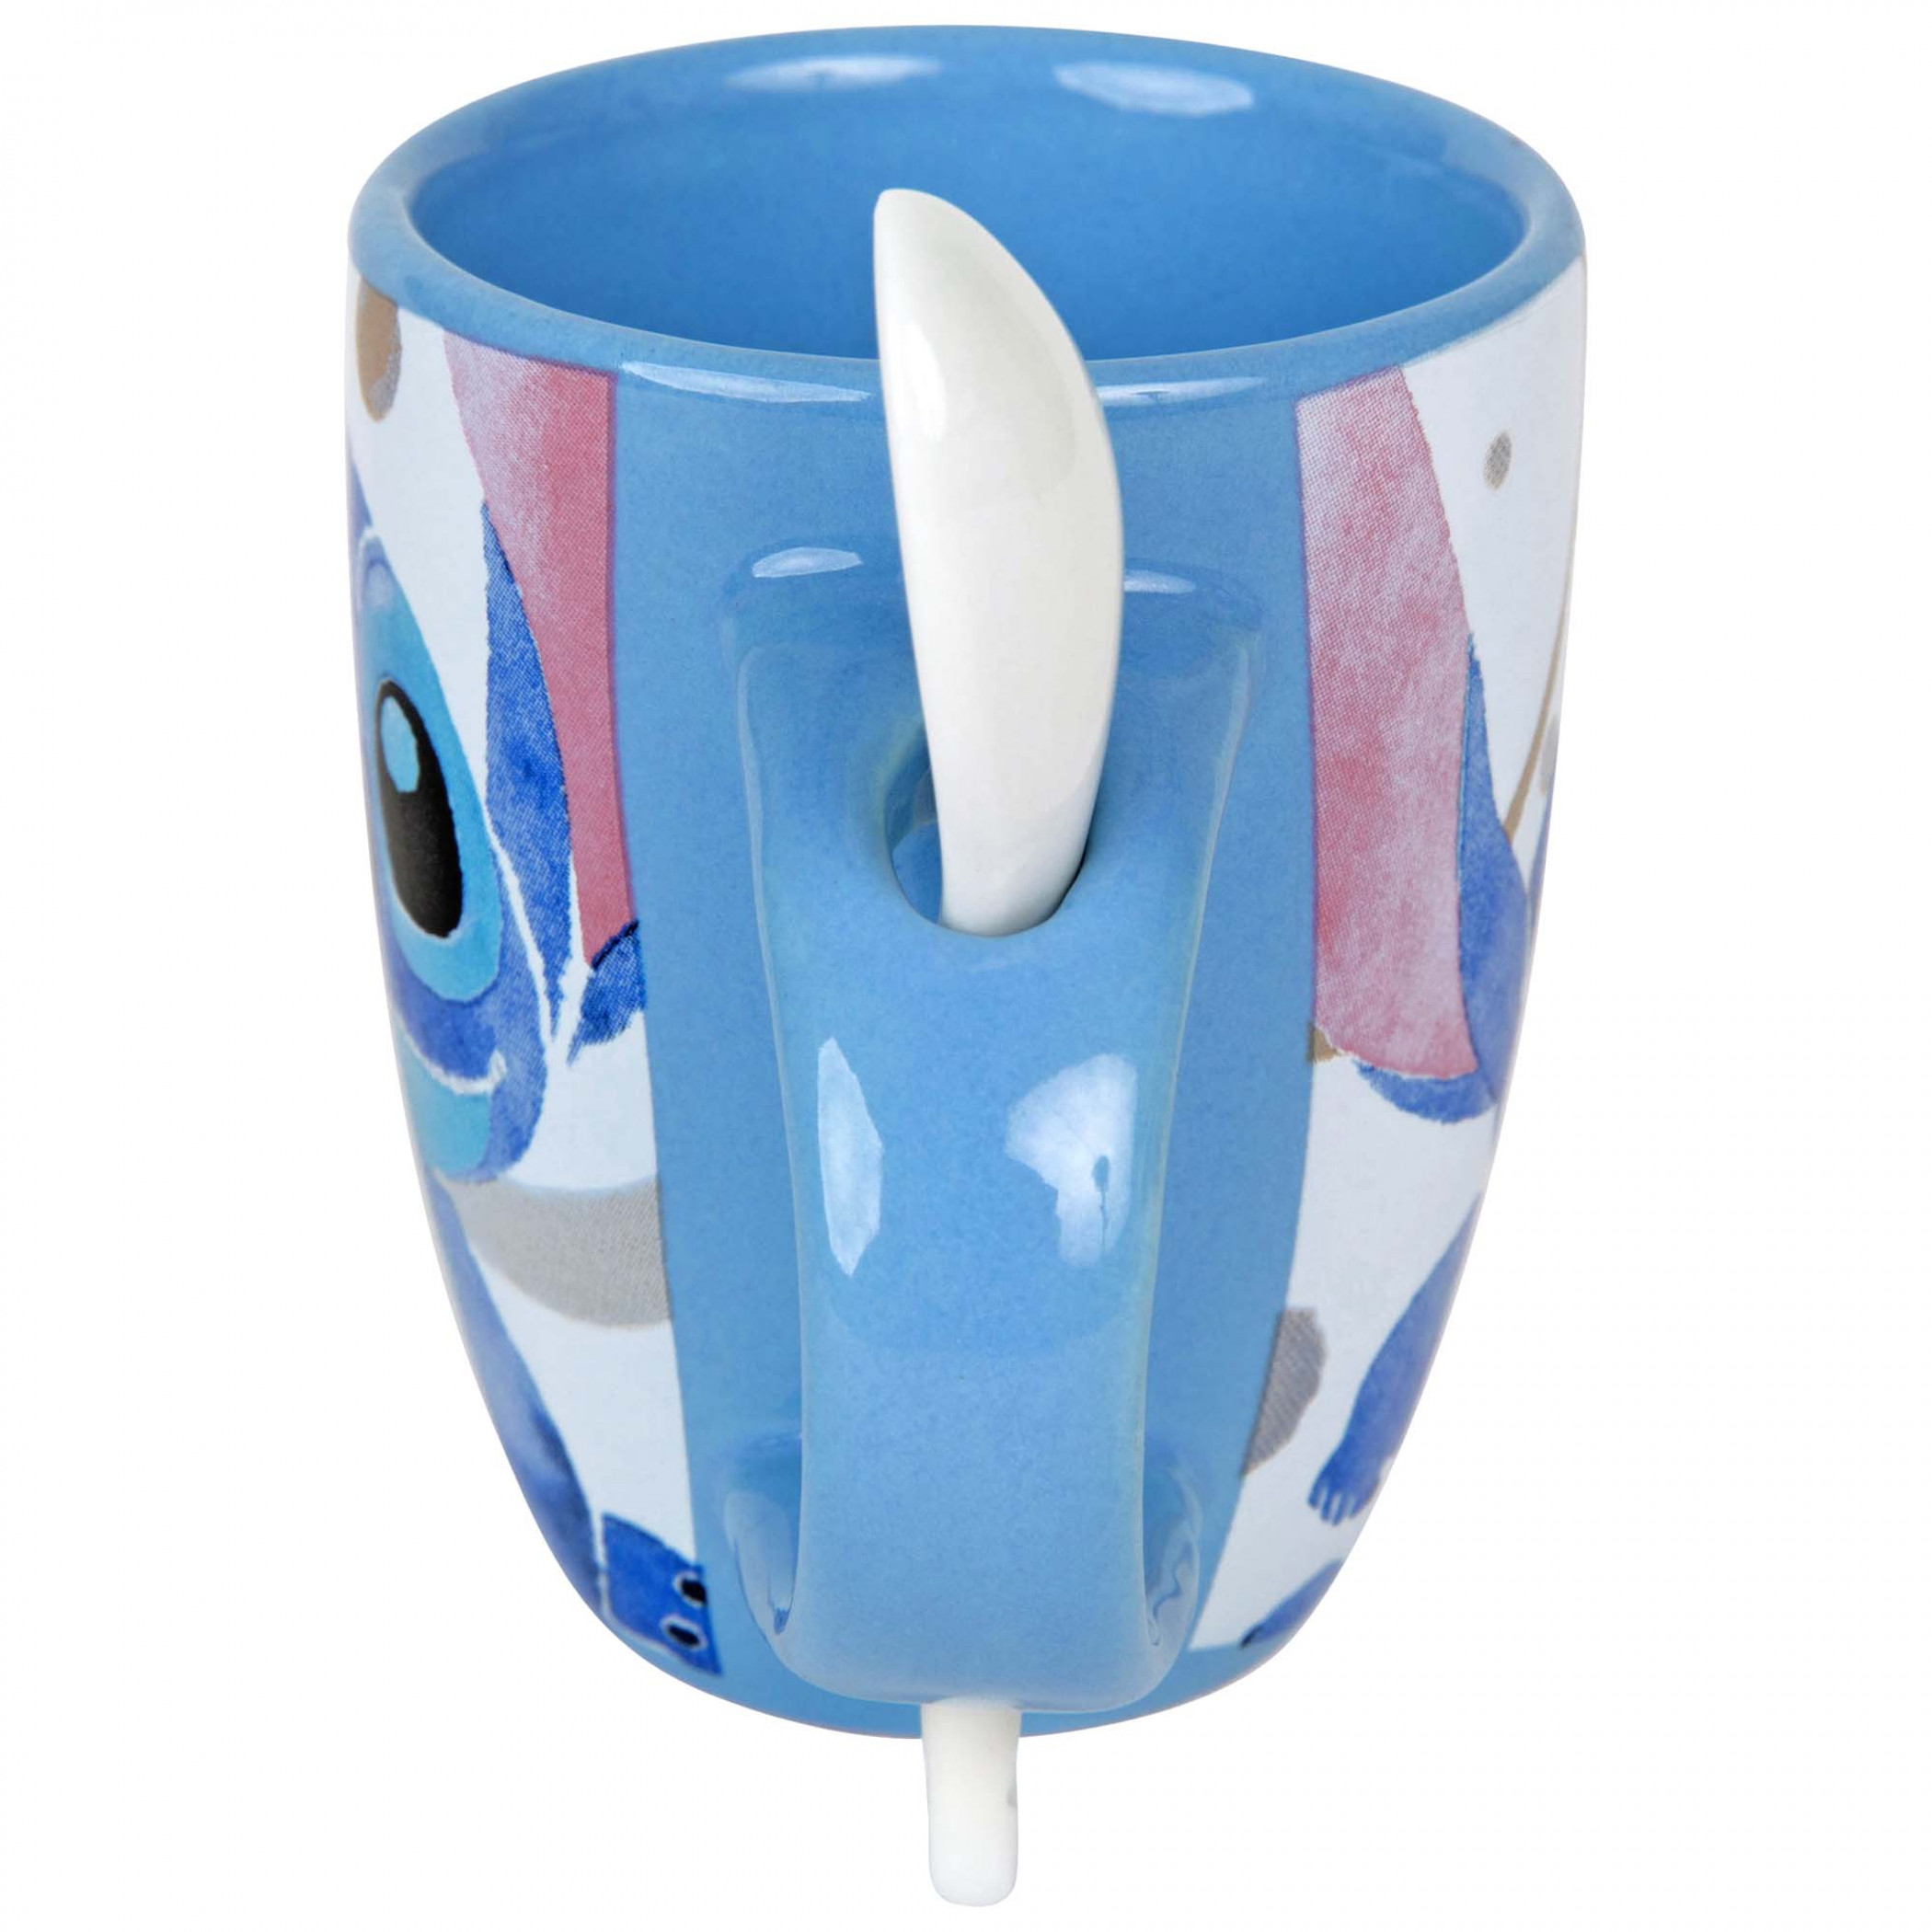 Disney Stitch Ceramic Espresso Mug with Spoon